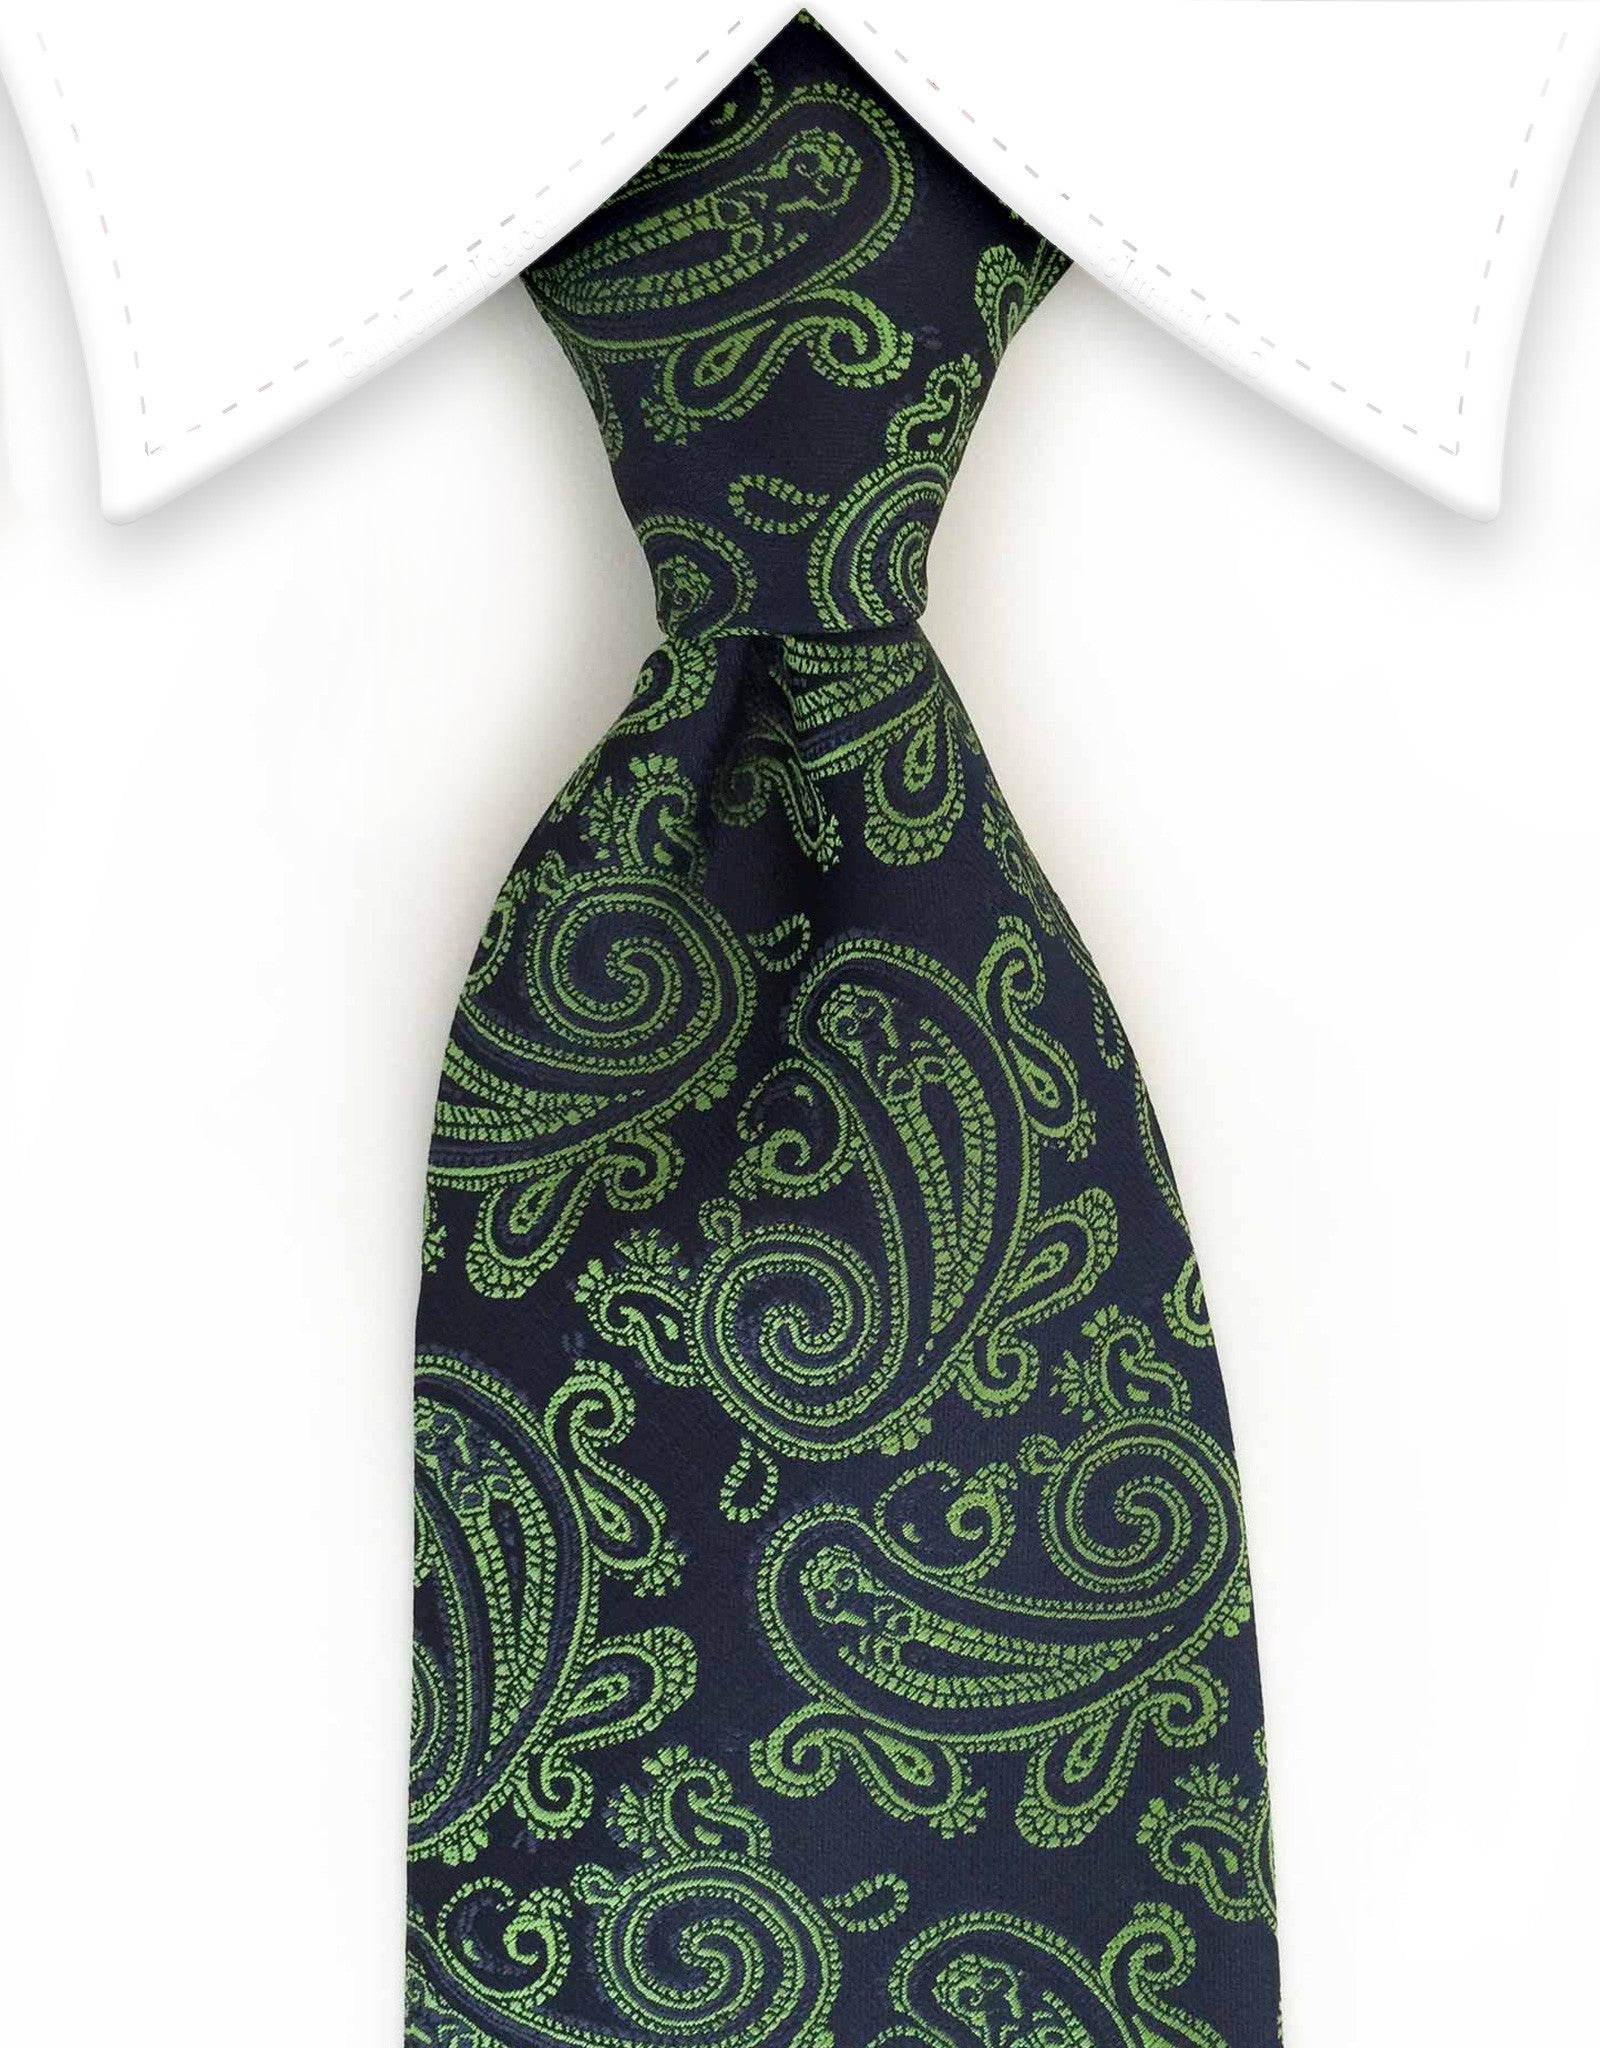 Navy blue & green paisley tie